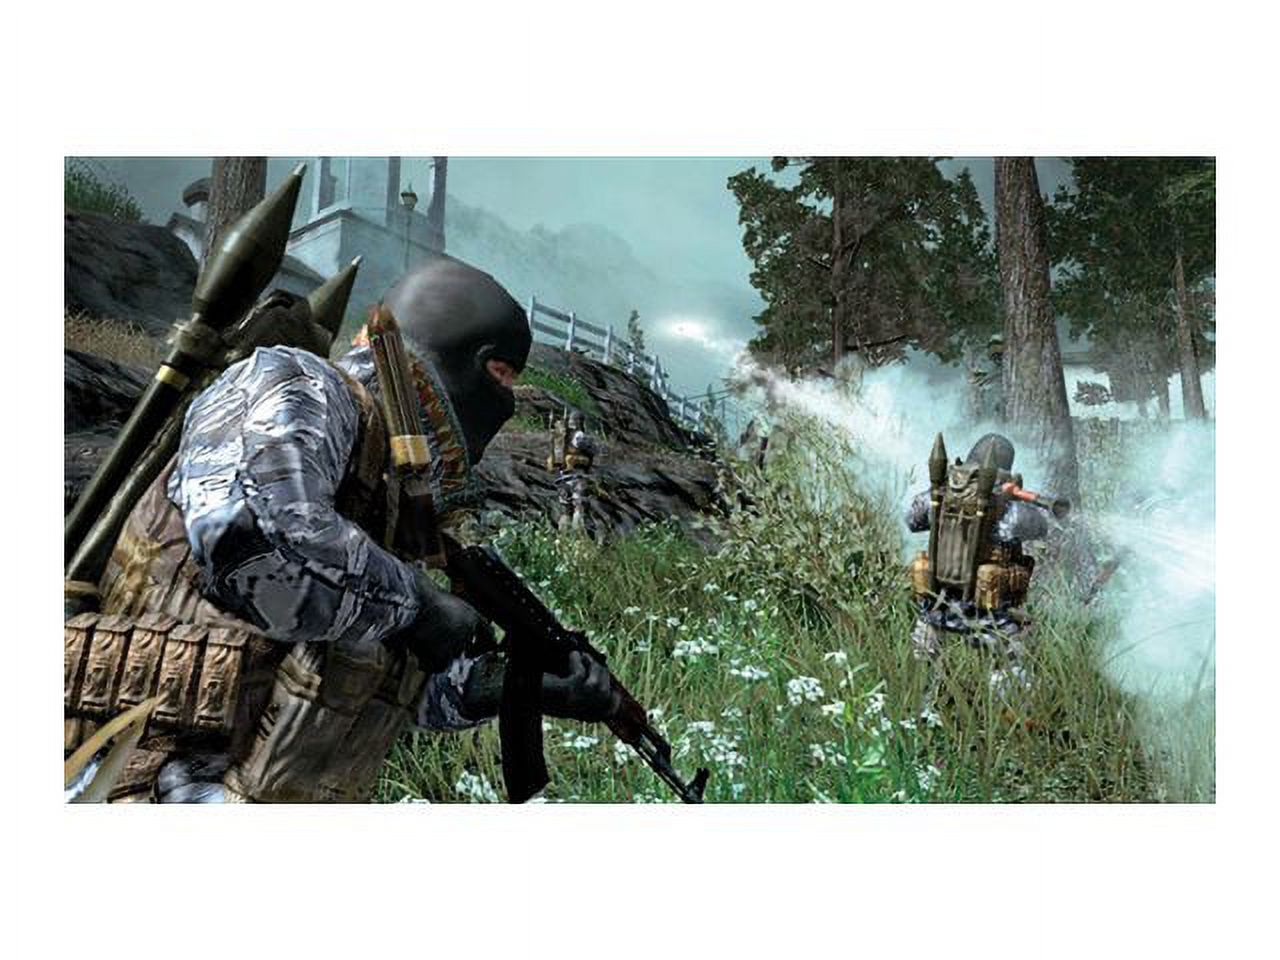 Call of Duty 4: Modern Warfare, Activision, PlayStation 3, 047875840591 - image 2 of 5